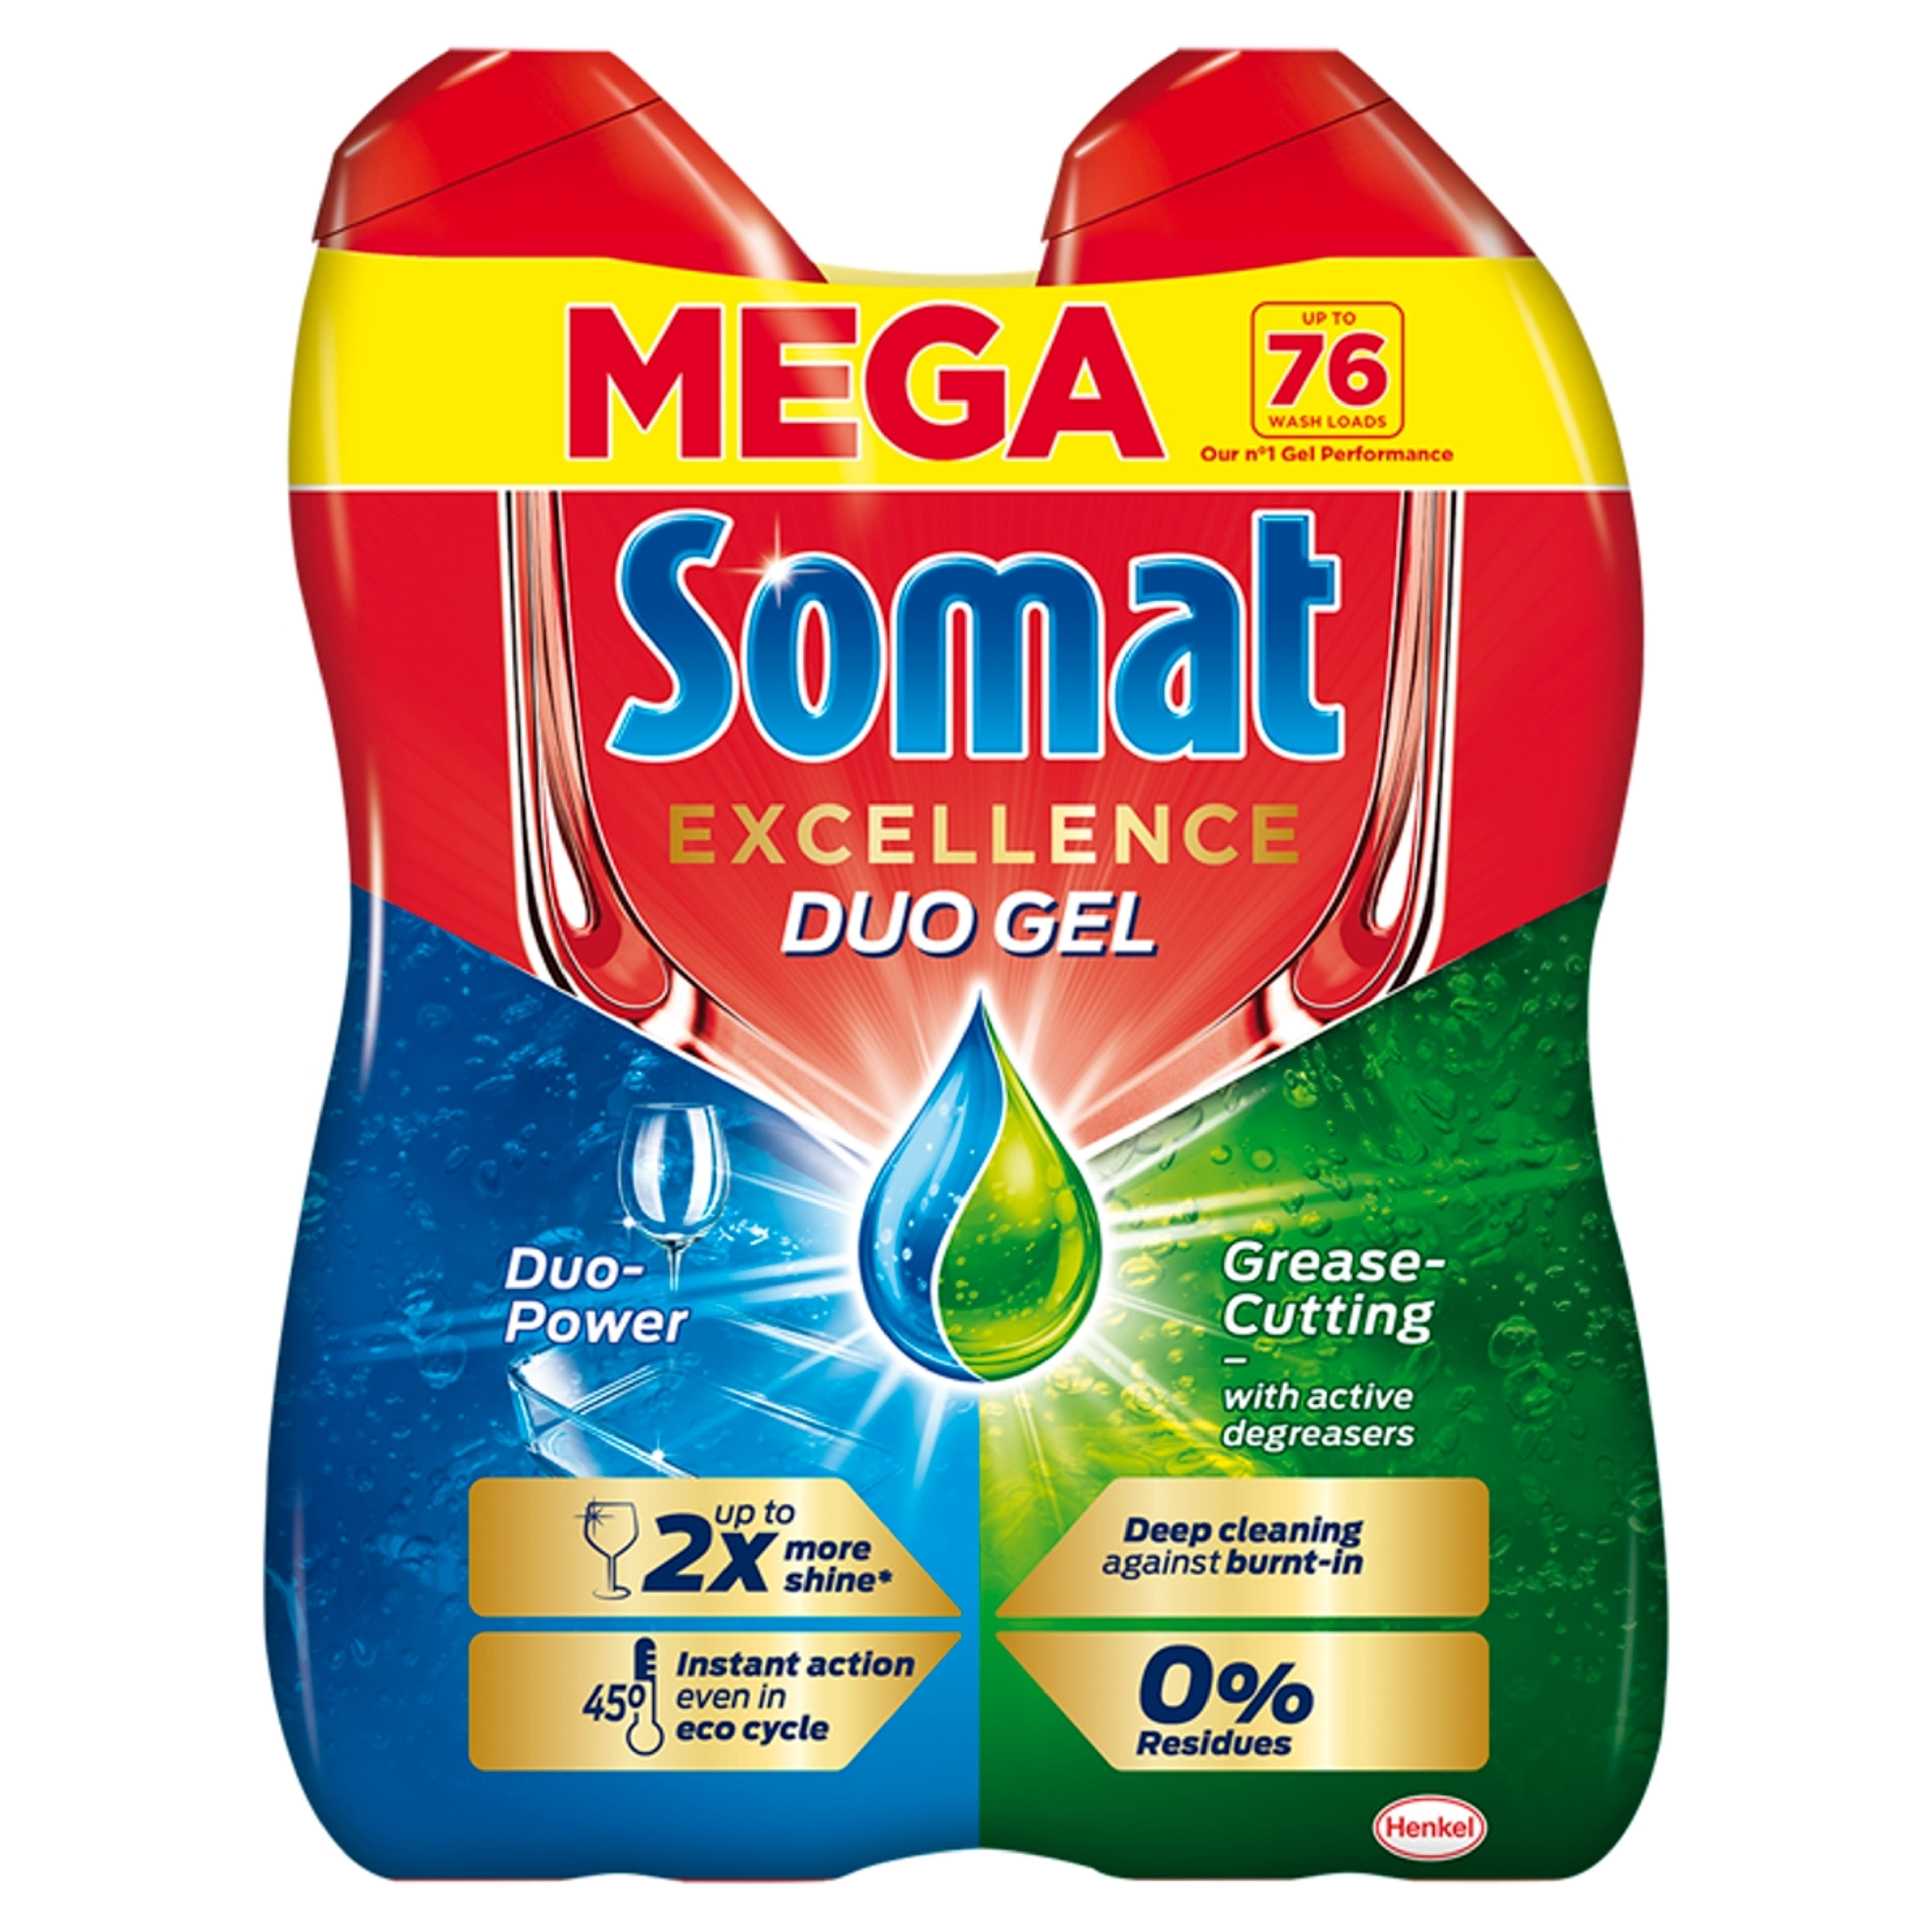 Somat Excellence Duo Gel Grease Cutting mosogatógél, 76 mosás (2x684 ml) - 1368 ml